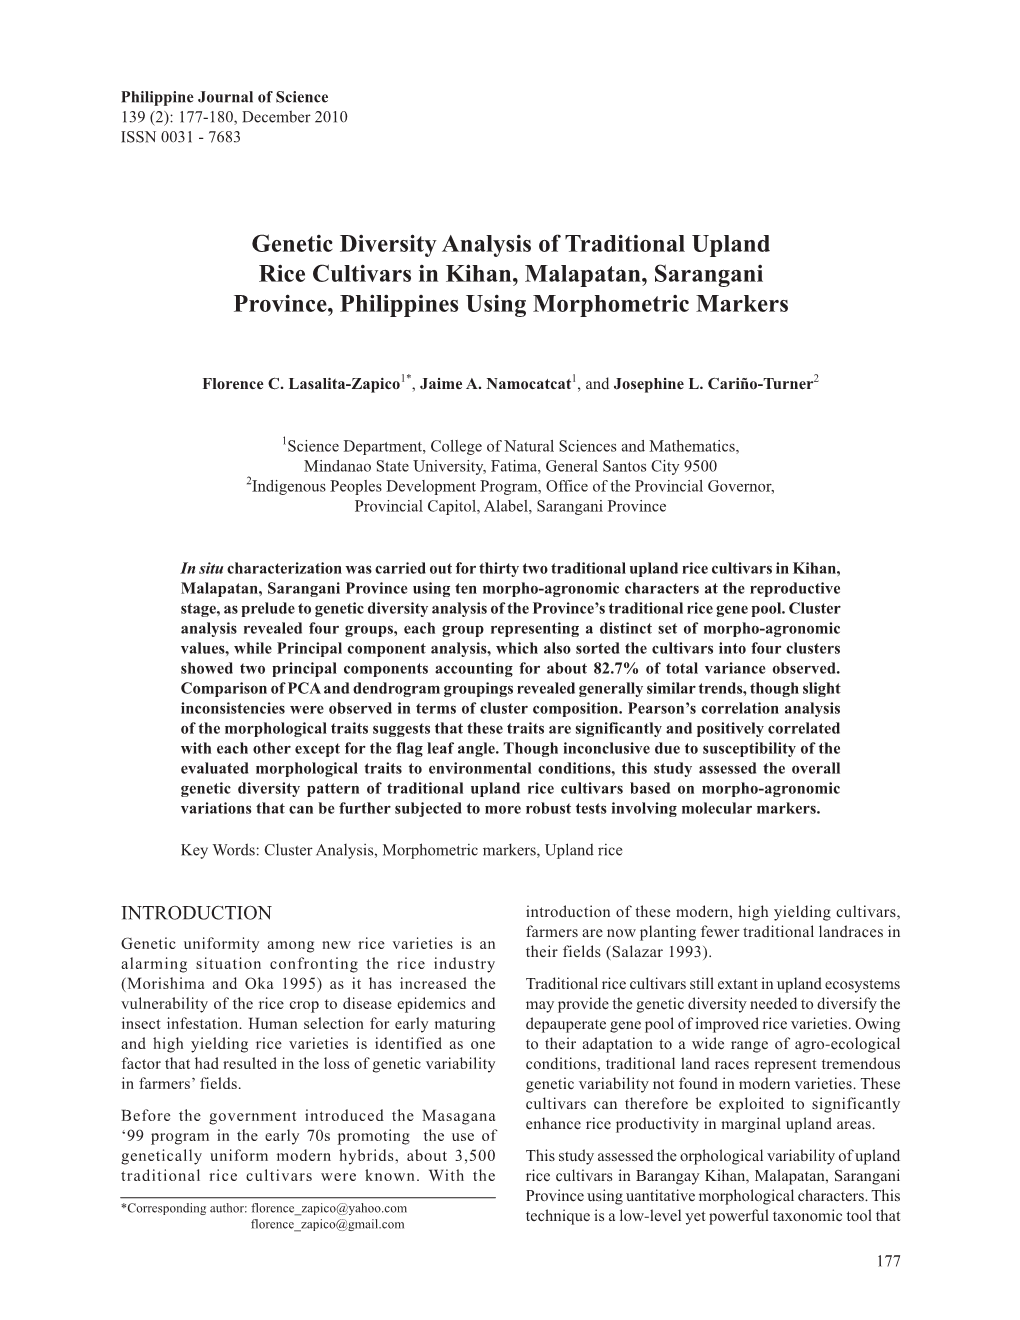 Genetic Diversity Analysis of Traditional Upland Rice Cultivars in Kihan, Malapatan, Sarangani Province, Philippines Using Morphometric Markers